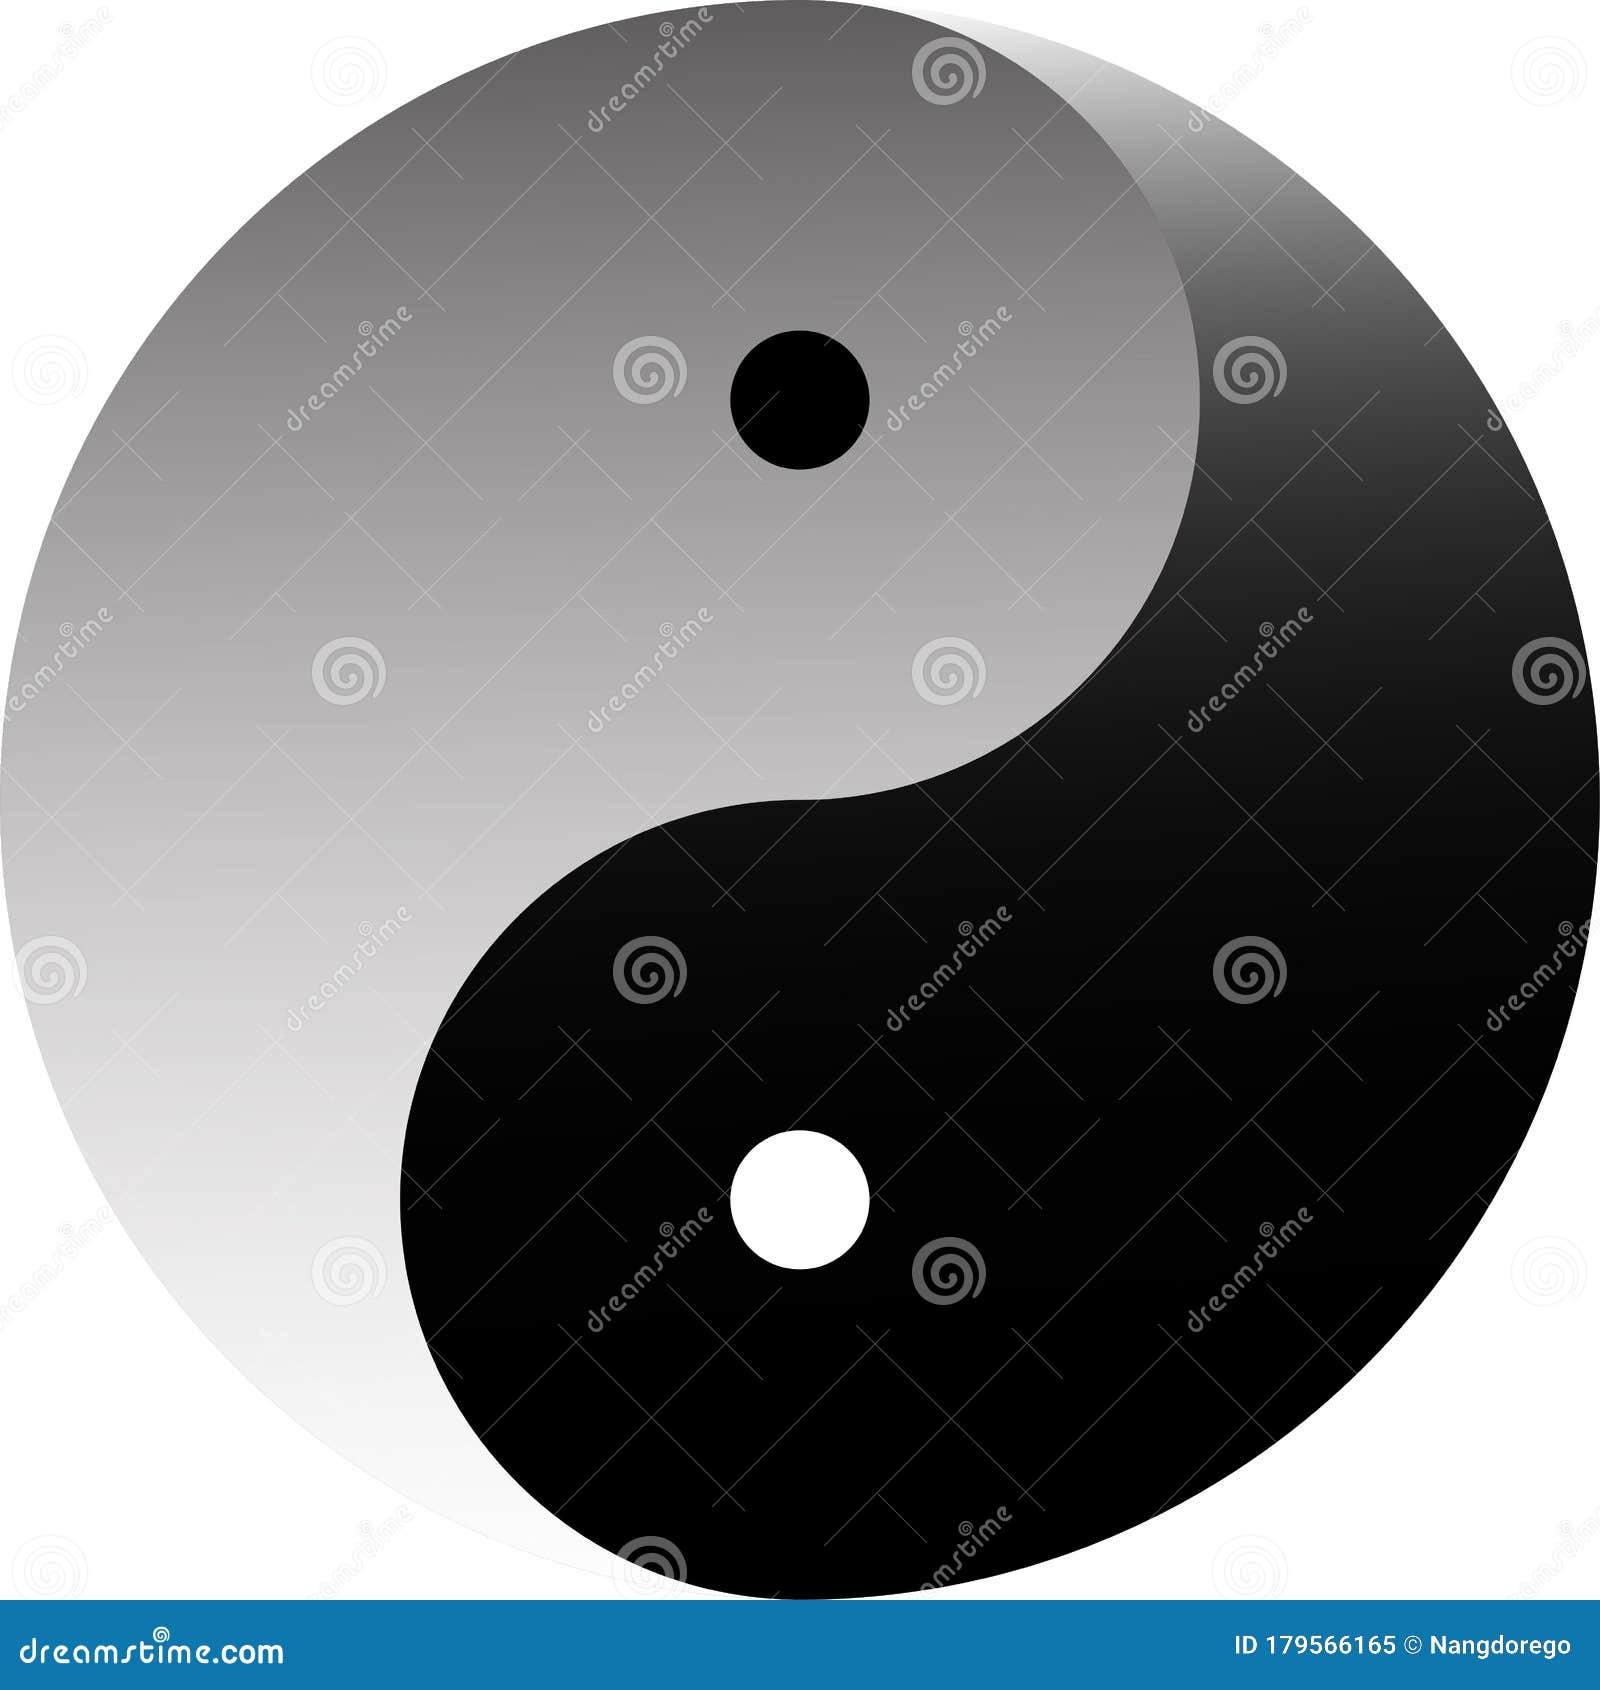 Yin yang symbol copy paste